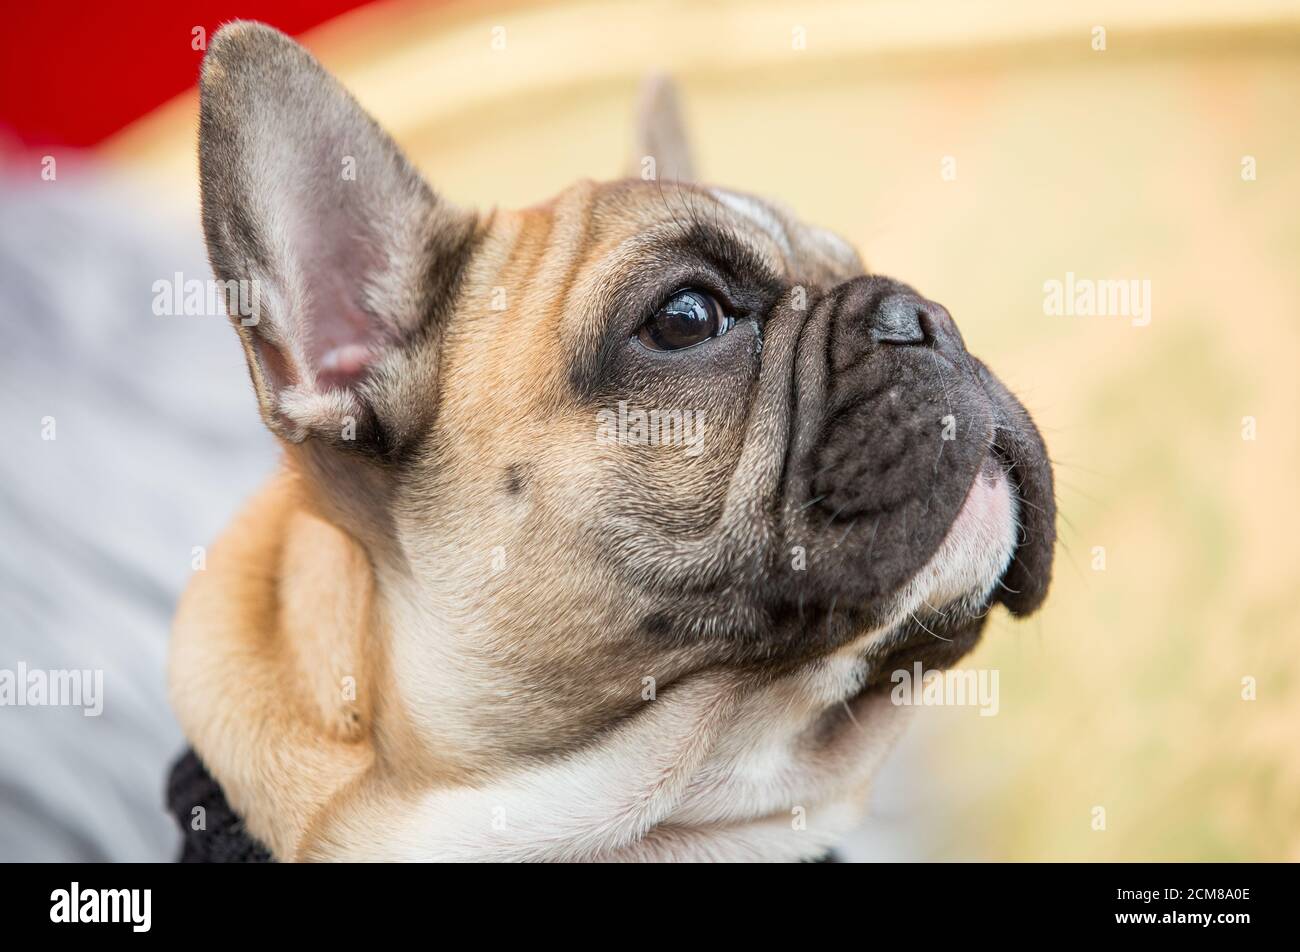 French Bulldog wearing a winter sweater Stock Photo